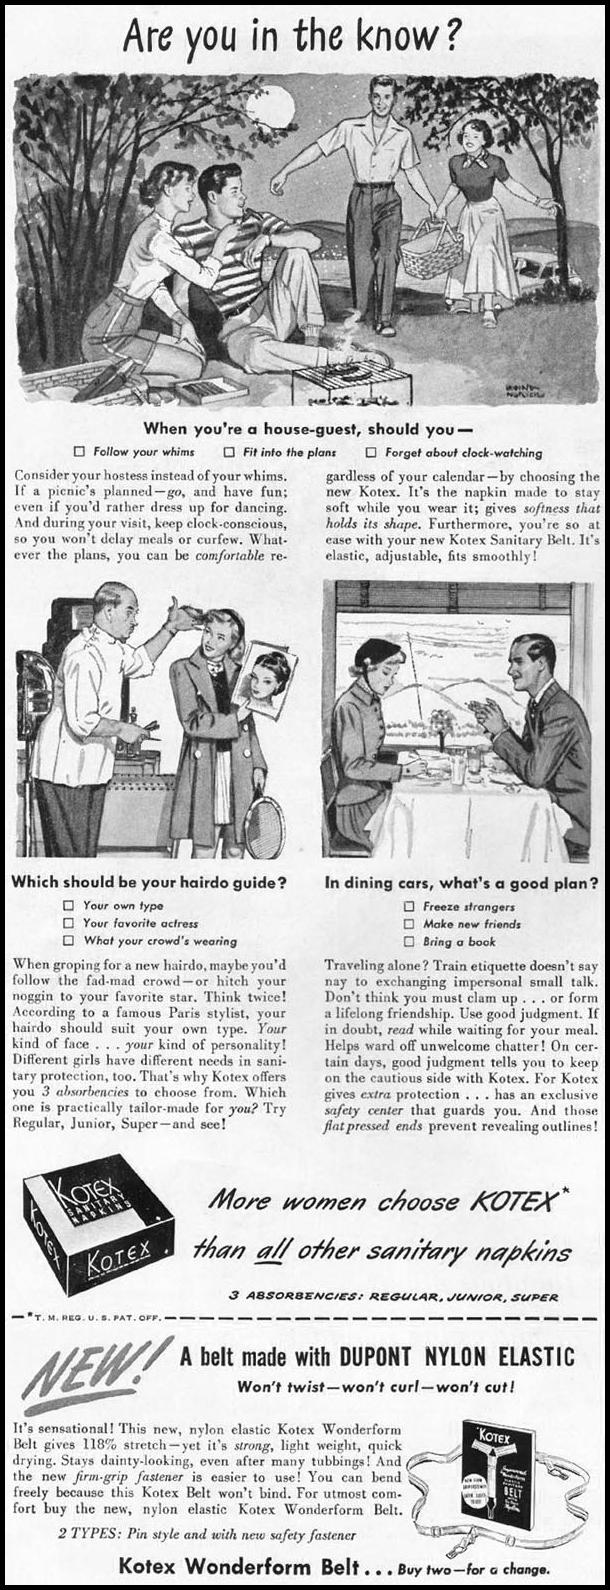 KOTEX
LADIES' HOME JOURNAL
07/01/1949
p. 8